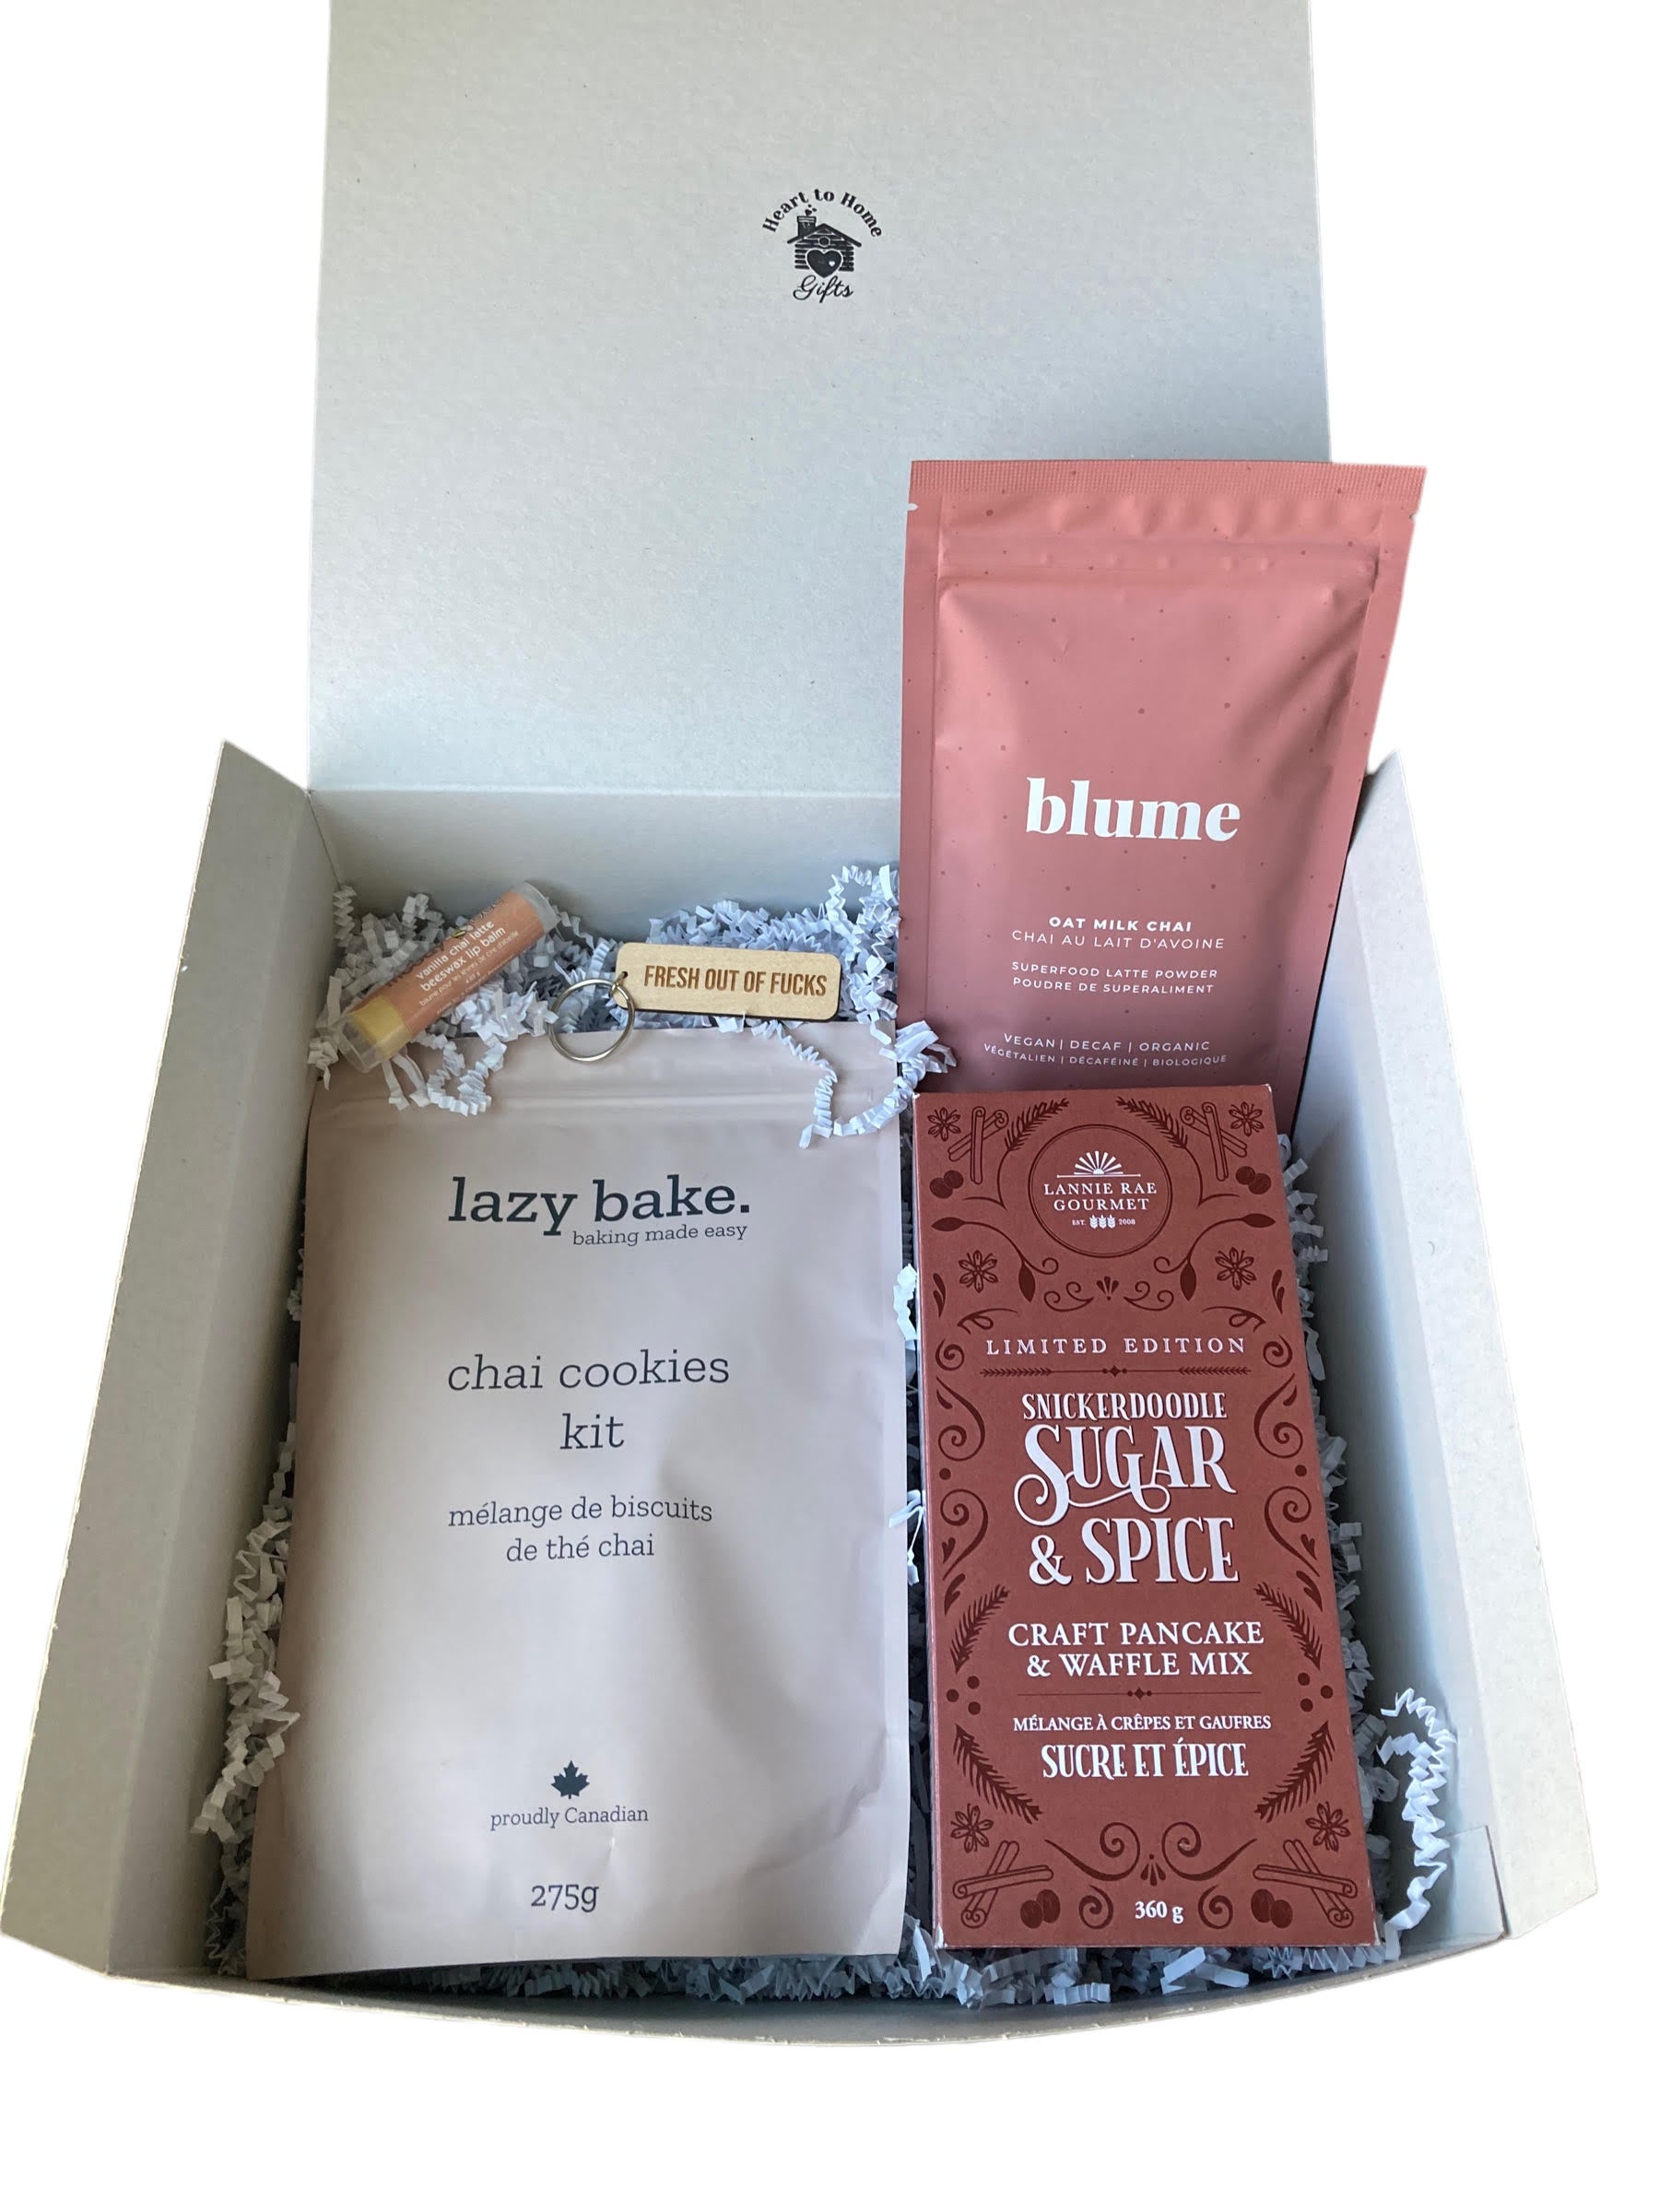 Sugar-and-spice-gift-box